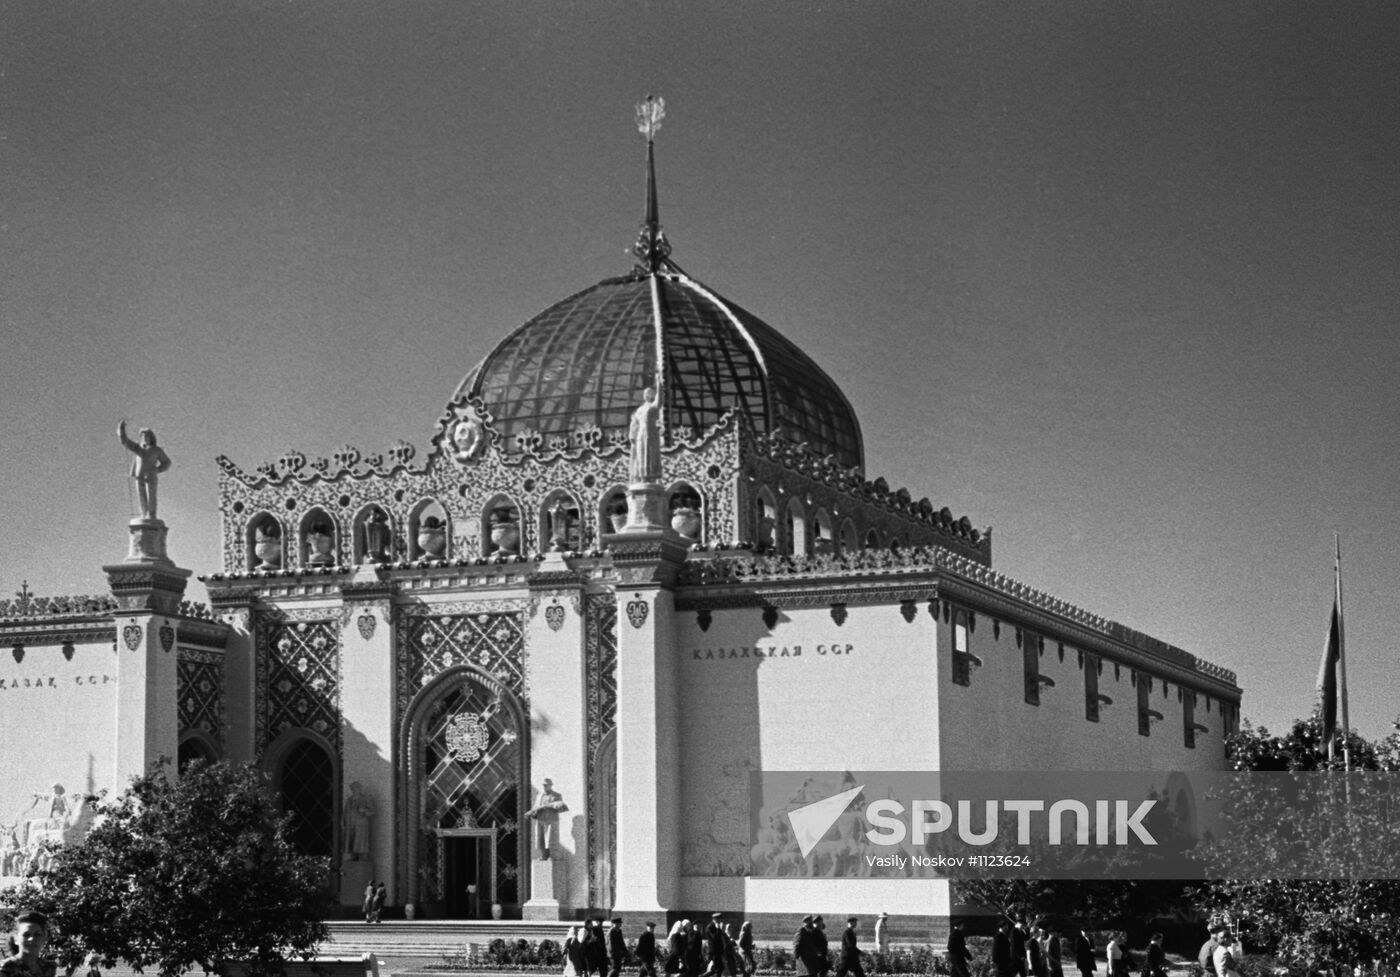 Pavilion of Kazakh SSR, VSKhV, Moscow